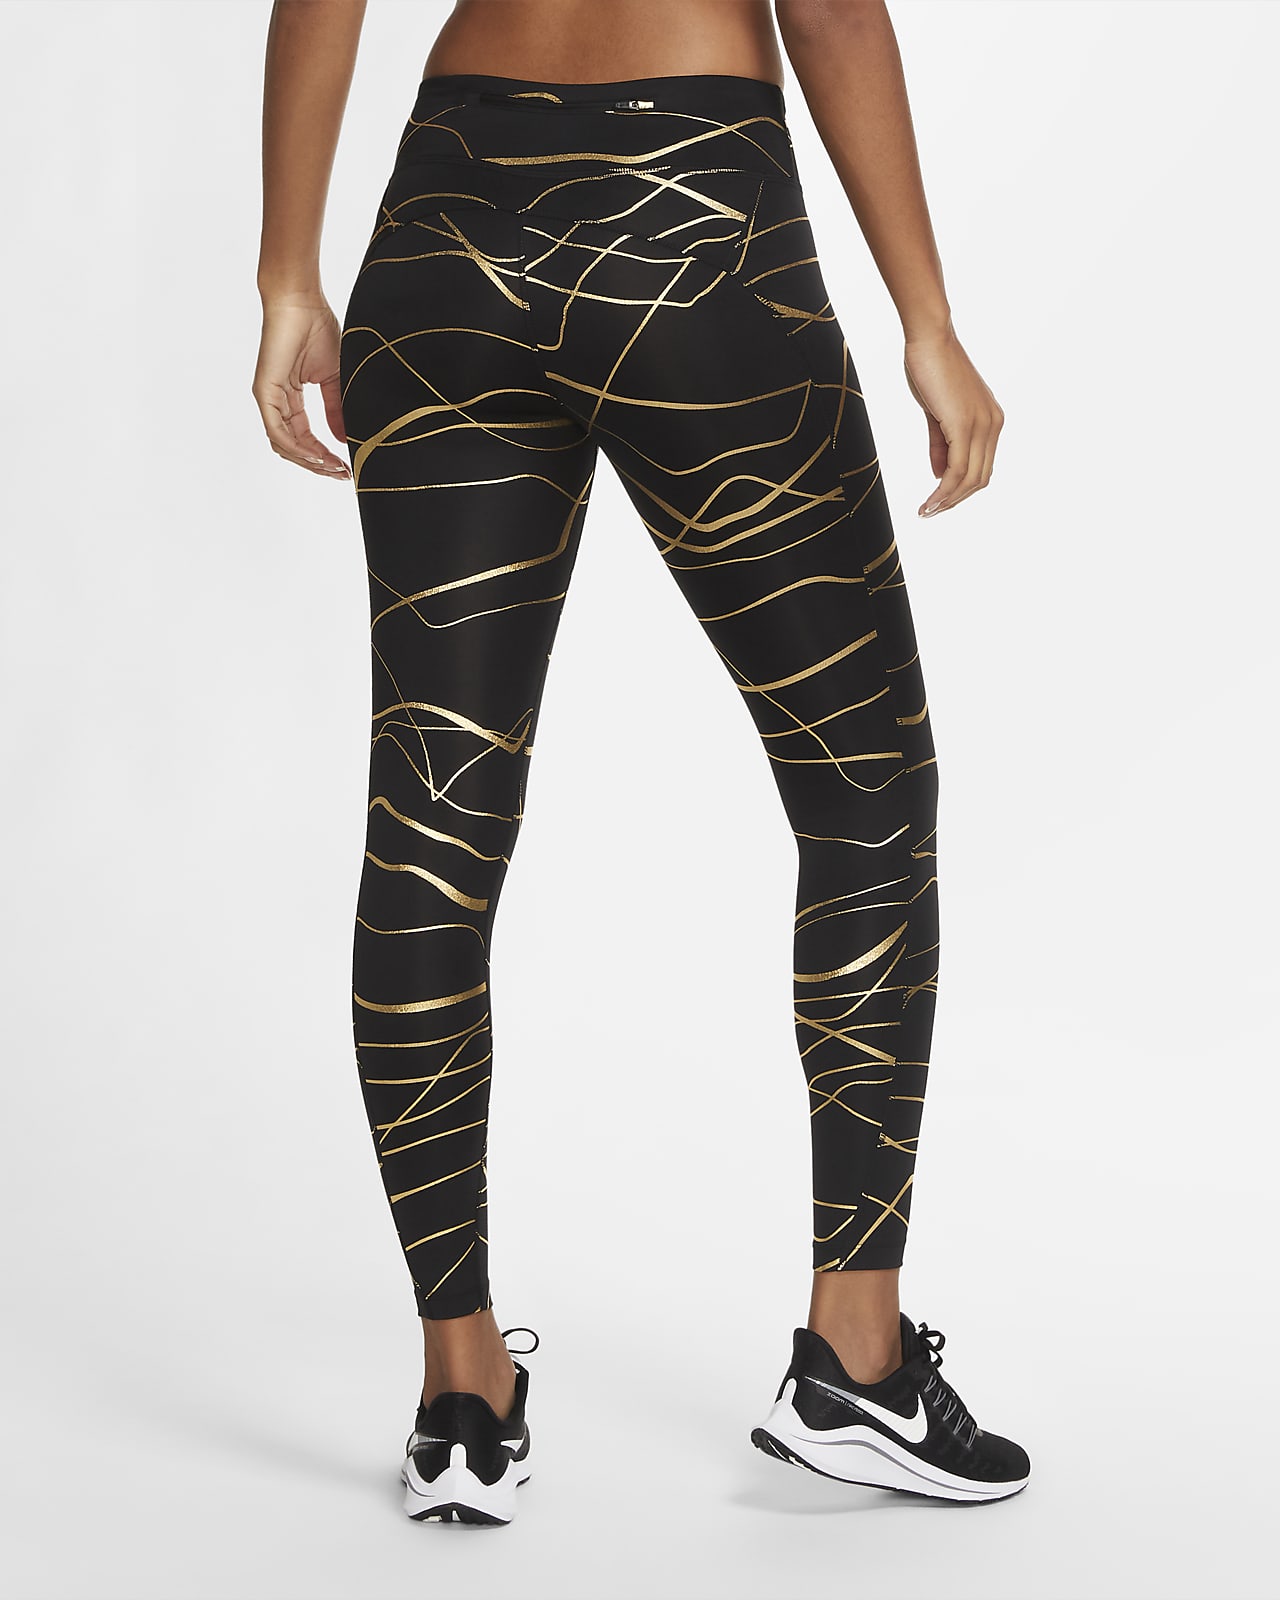 Nike Black and Metallic gold logo leggings small